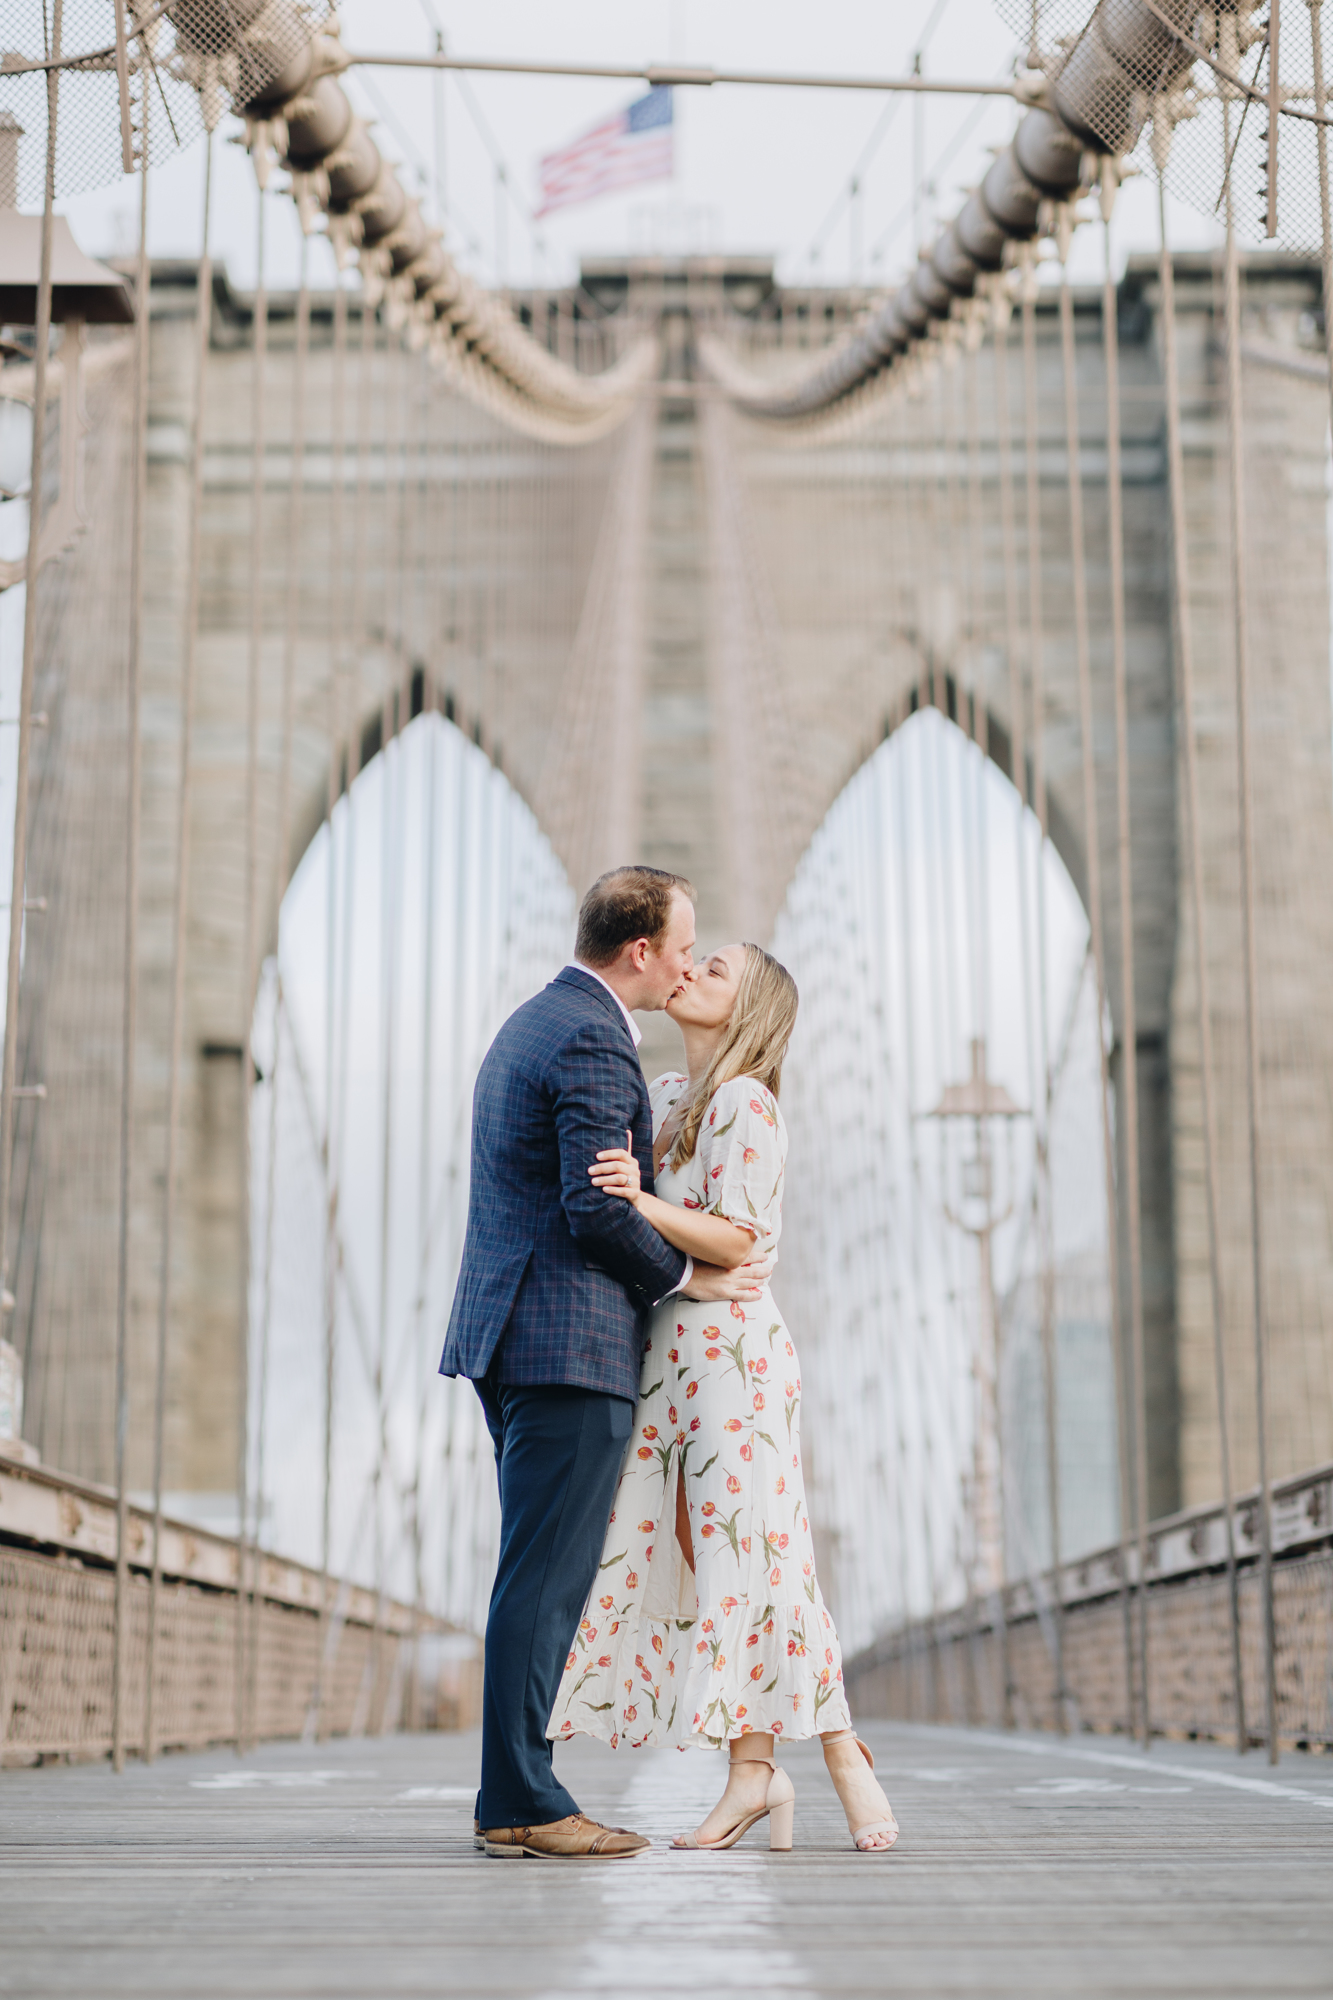 Gorgeous engagement photos on the Brooklyn Bridge